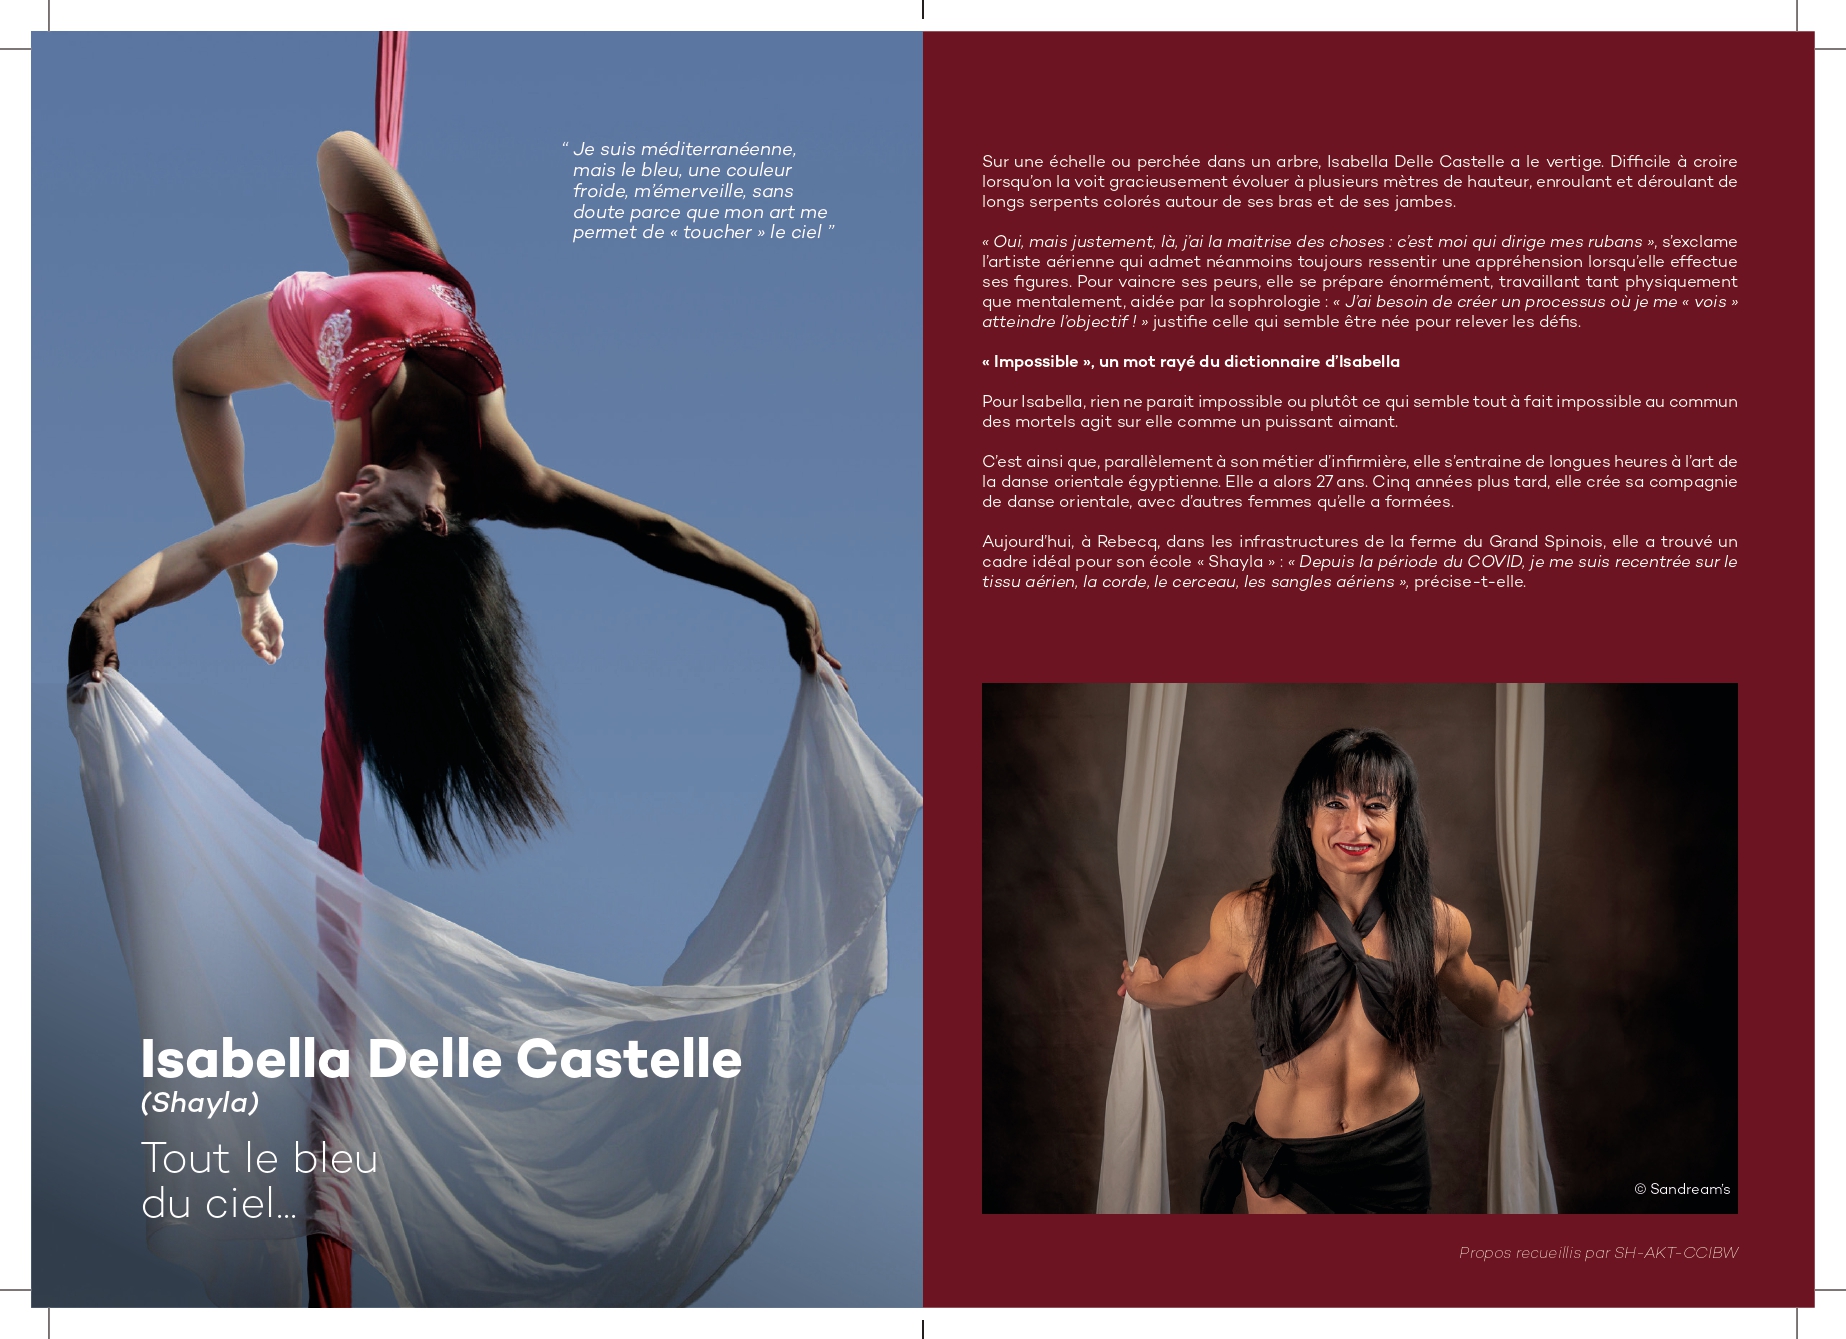 isabella-delle-castelle-tissu-aerien-sucrerie-de-wavre-diner-avec-les-stars_page-0001-1.jpg